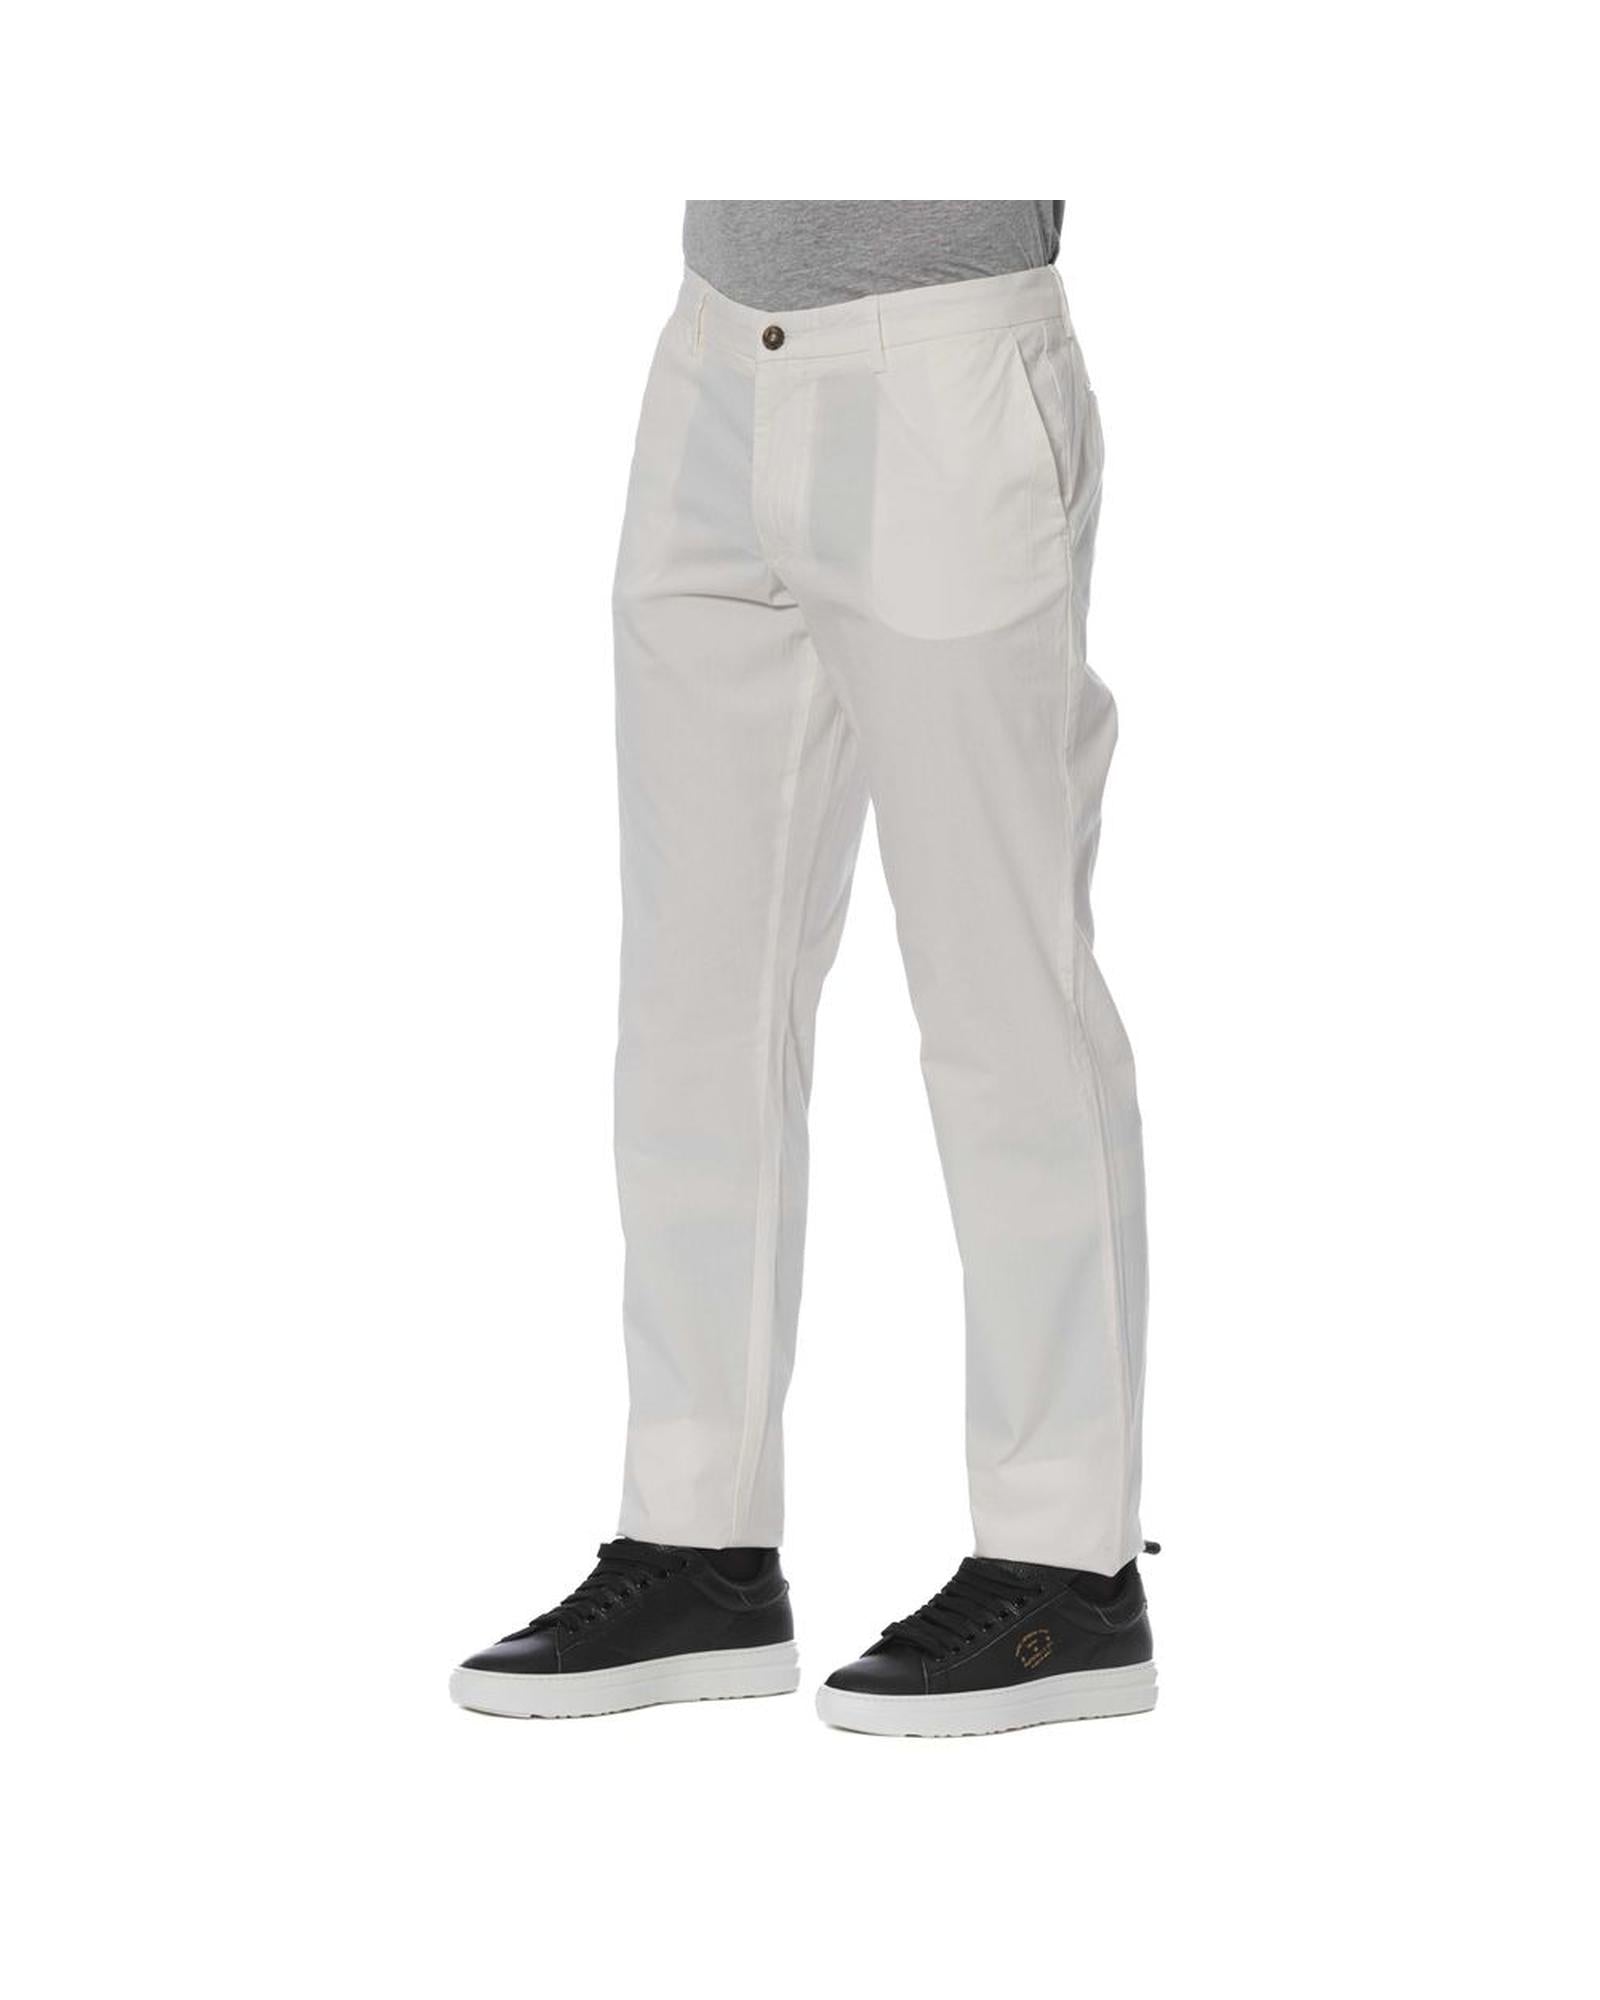 Men's White Cotton Jeans & Pant - W52 US